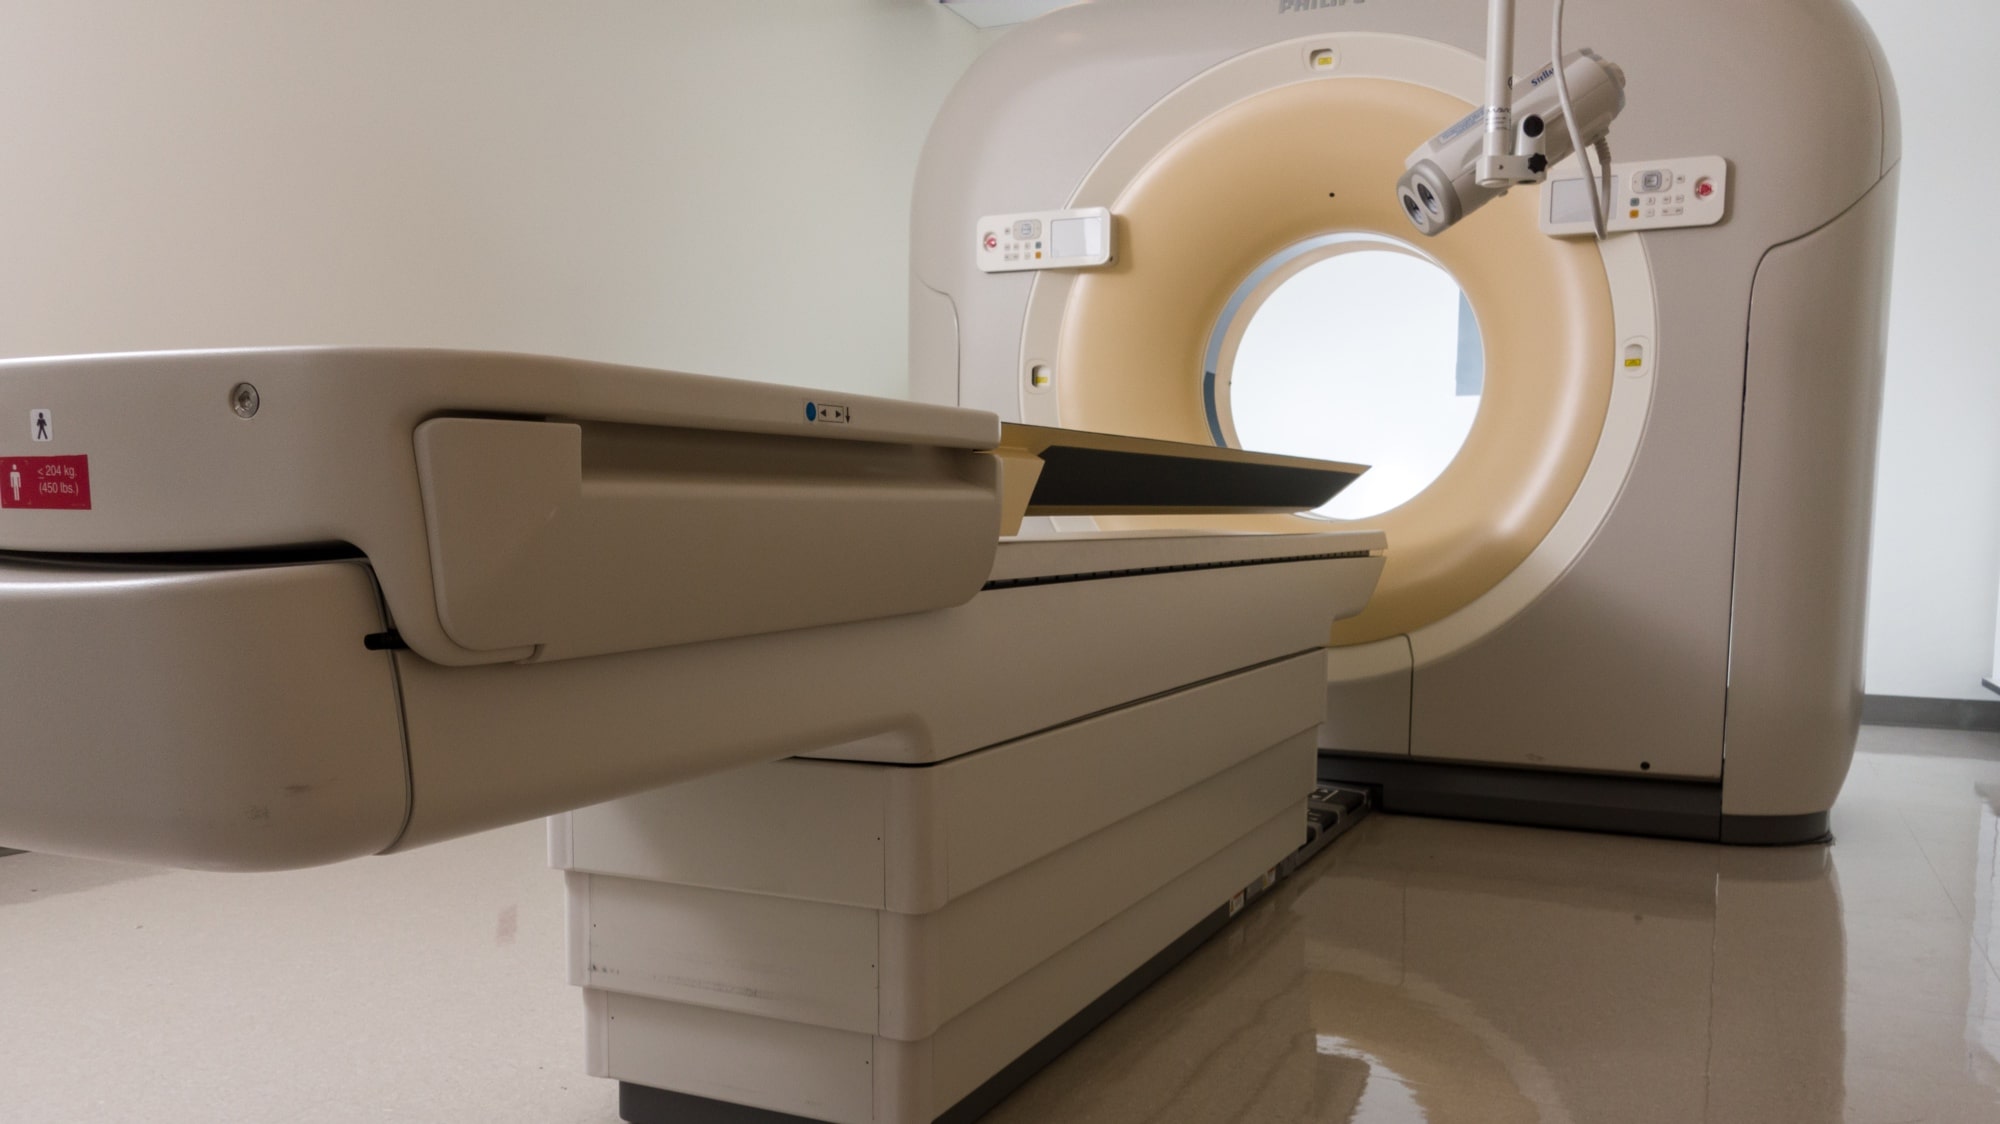 Siemen’s Symphony MRI equipment